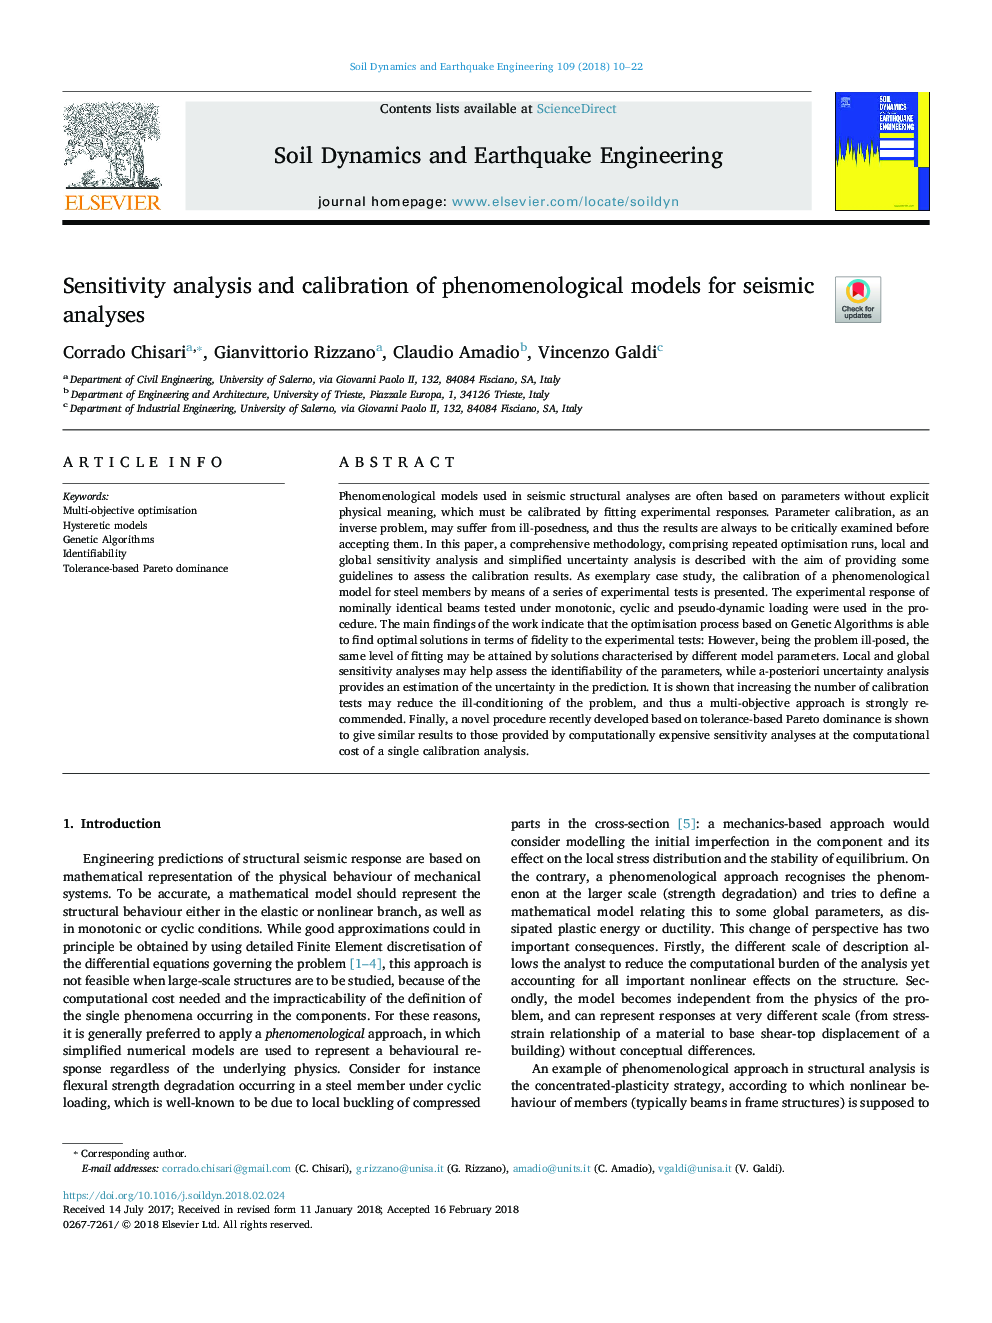 Sensitivity analysis and calibration of phenomenological models for seismic analyses